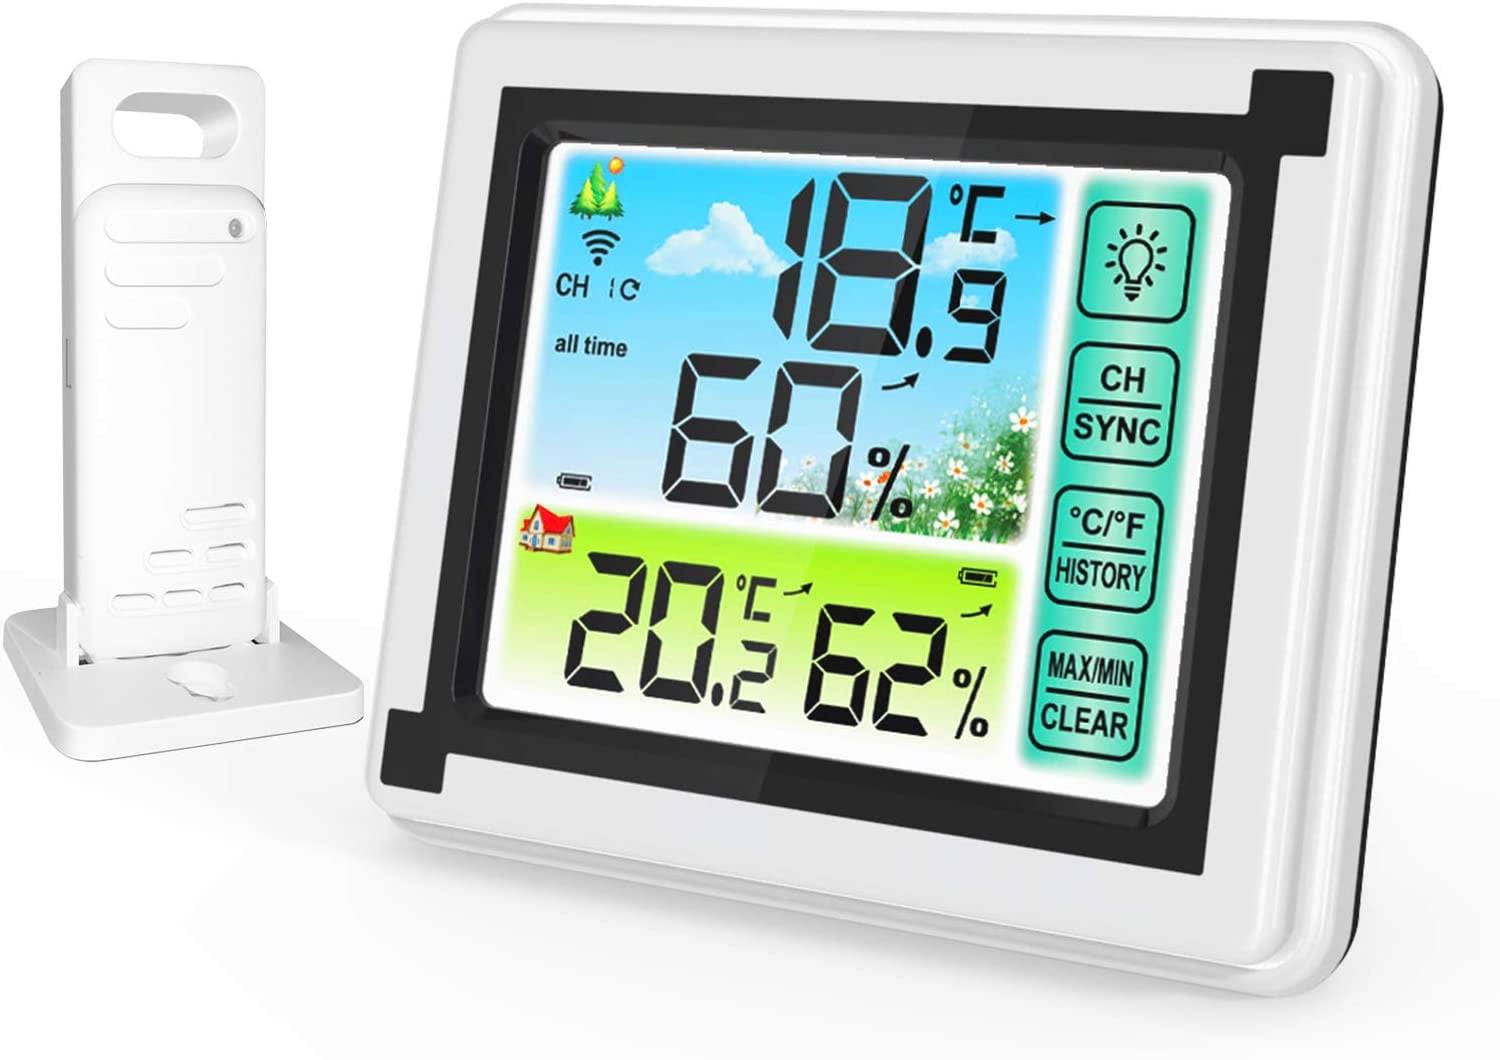 Digital LCD Wireless Indoor/Outdoor Weather Station Sensor Temperature Humidity 